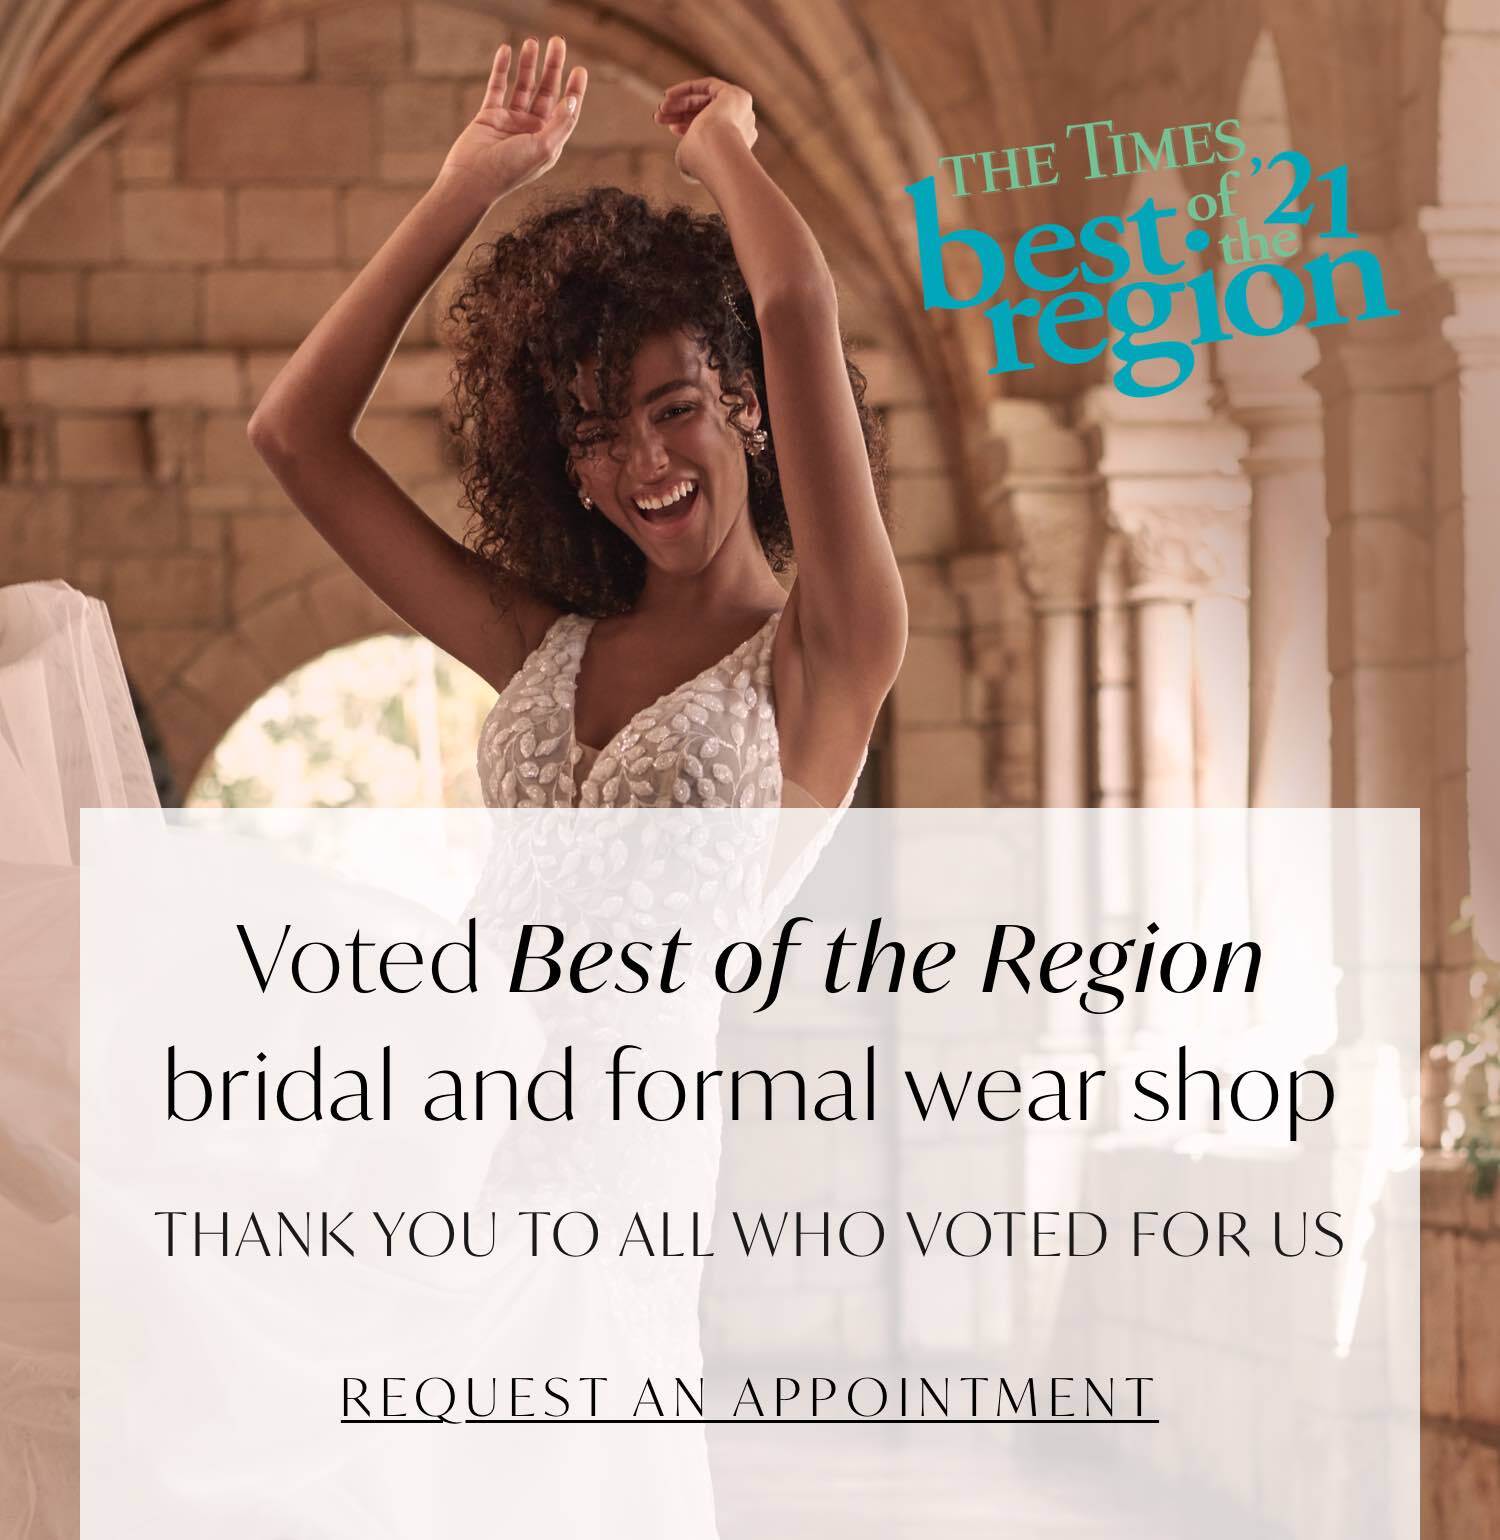 Best of the region bridal and formal wear shop. Buy your wedding dress at Elegance Wedding. Mobile image.